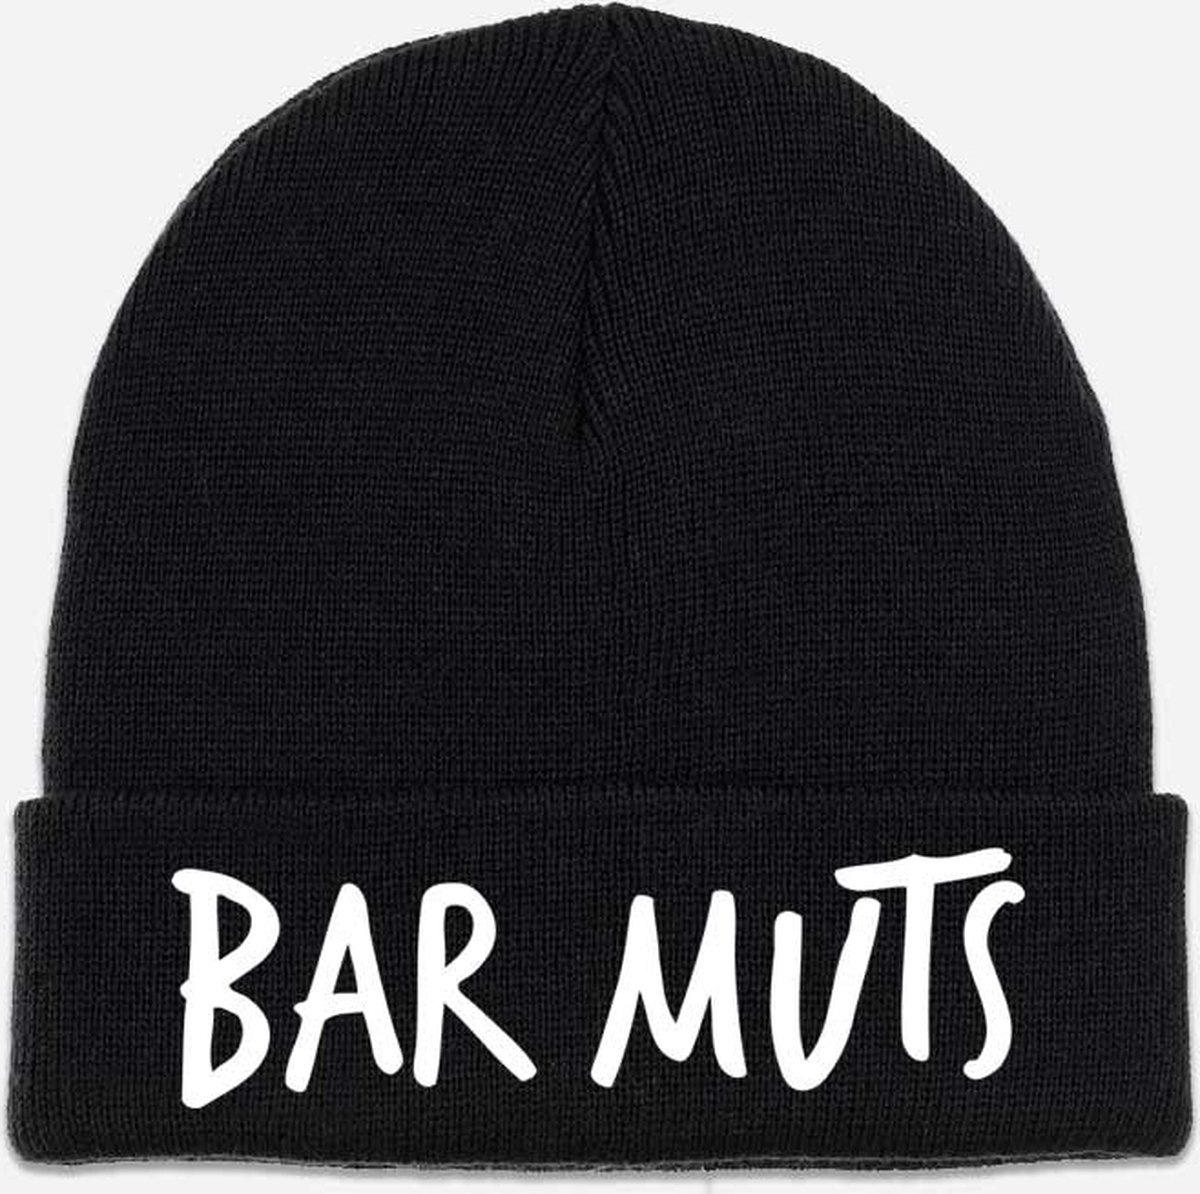 Muts Bar muts - Beanie - Winter - Heren - Dames - One-size - Acryl - zwart